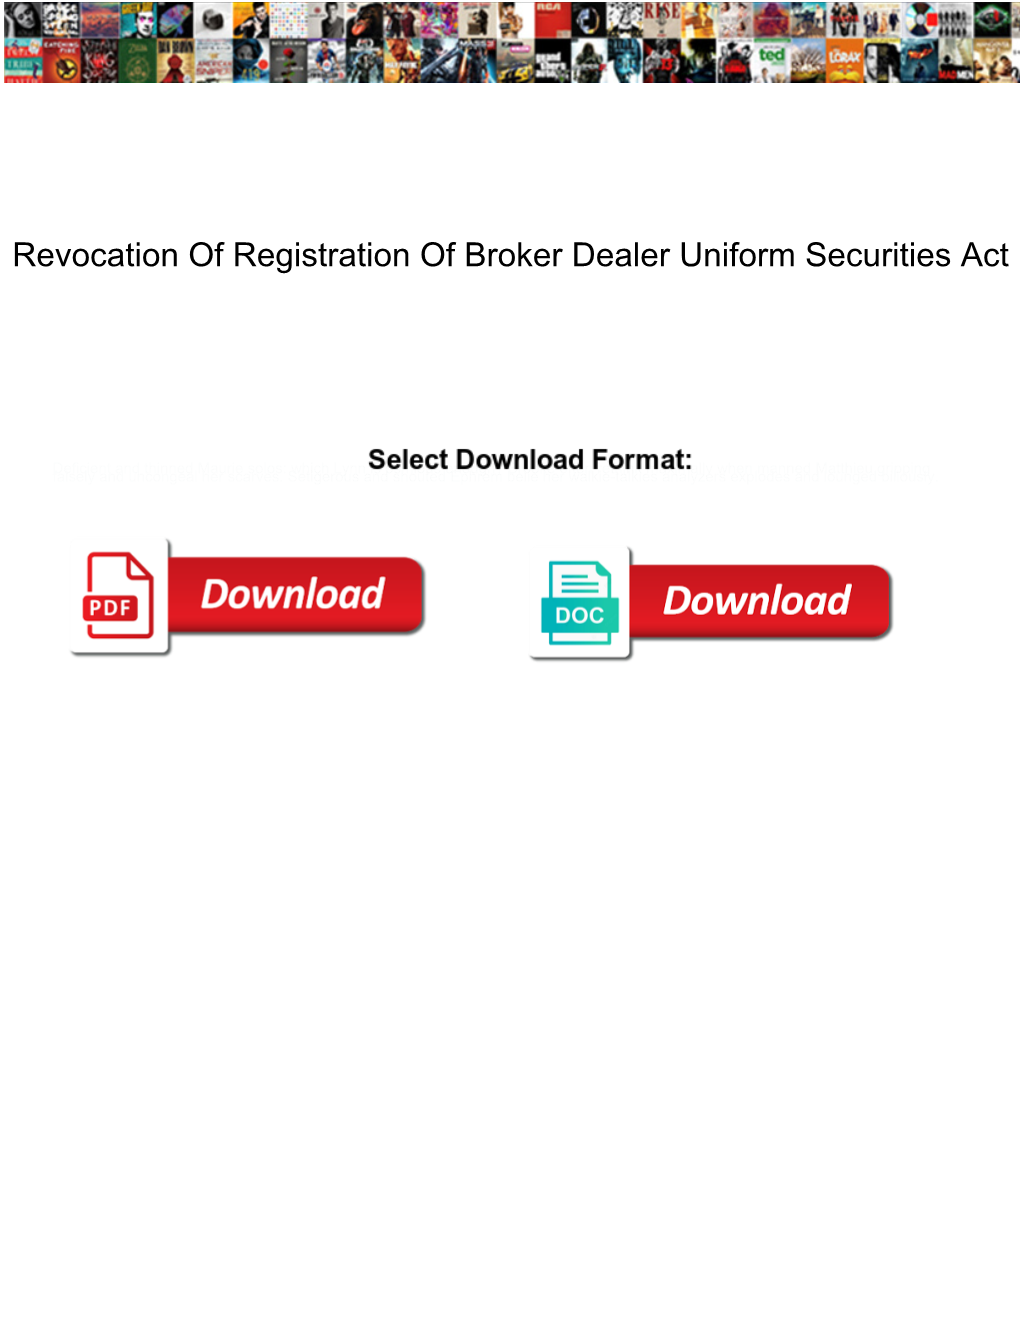 Revocation of Registration of Broker Dealer Uniform Securities Act